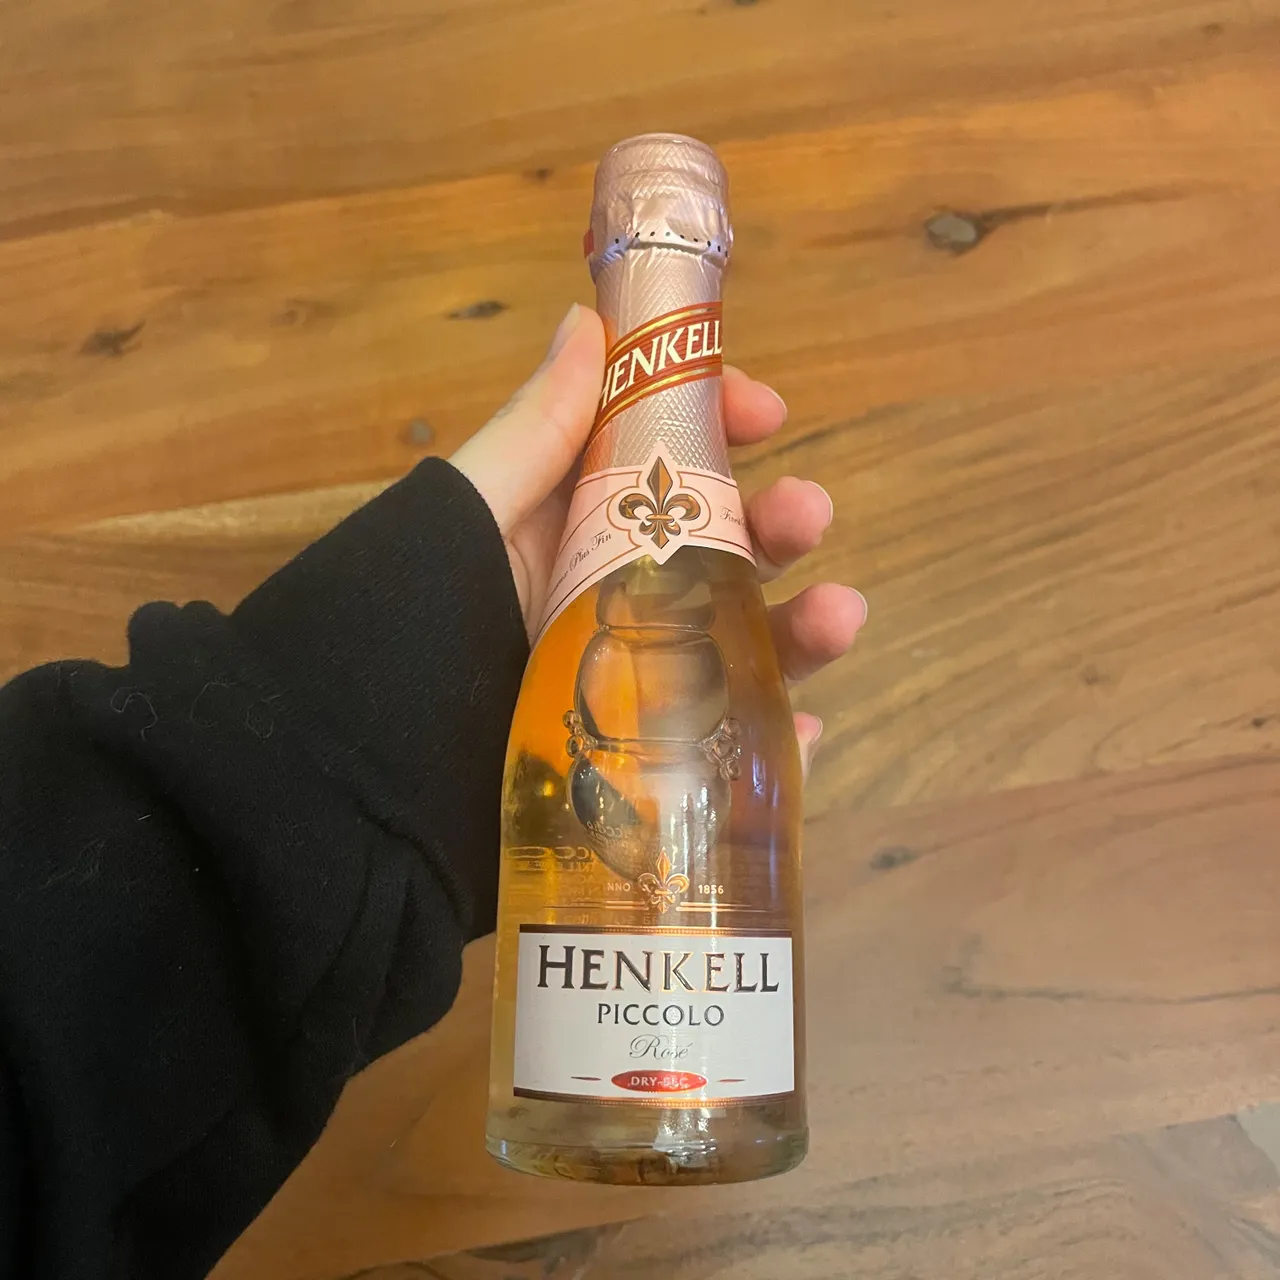 Mini sparkling wine Henkell piccolo rose photo 1